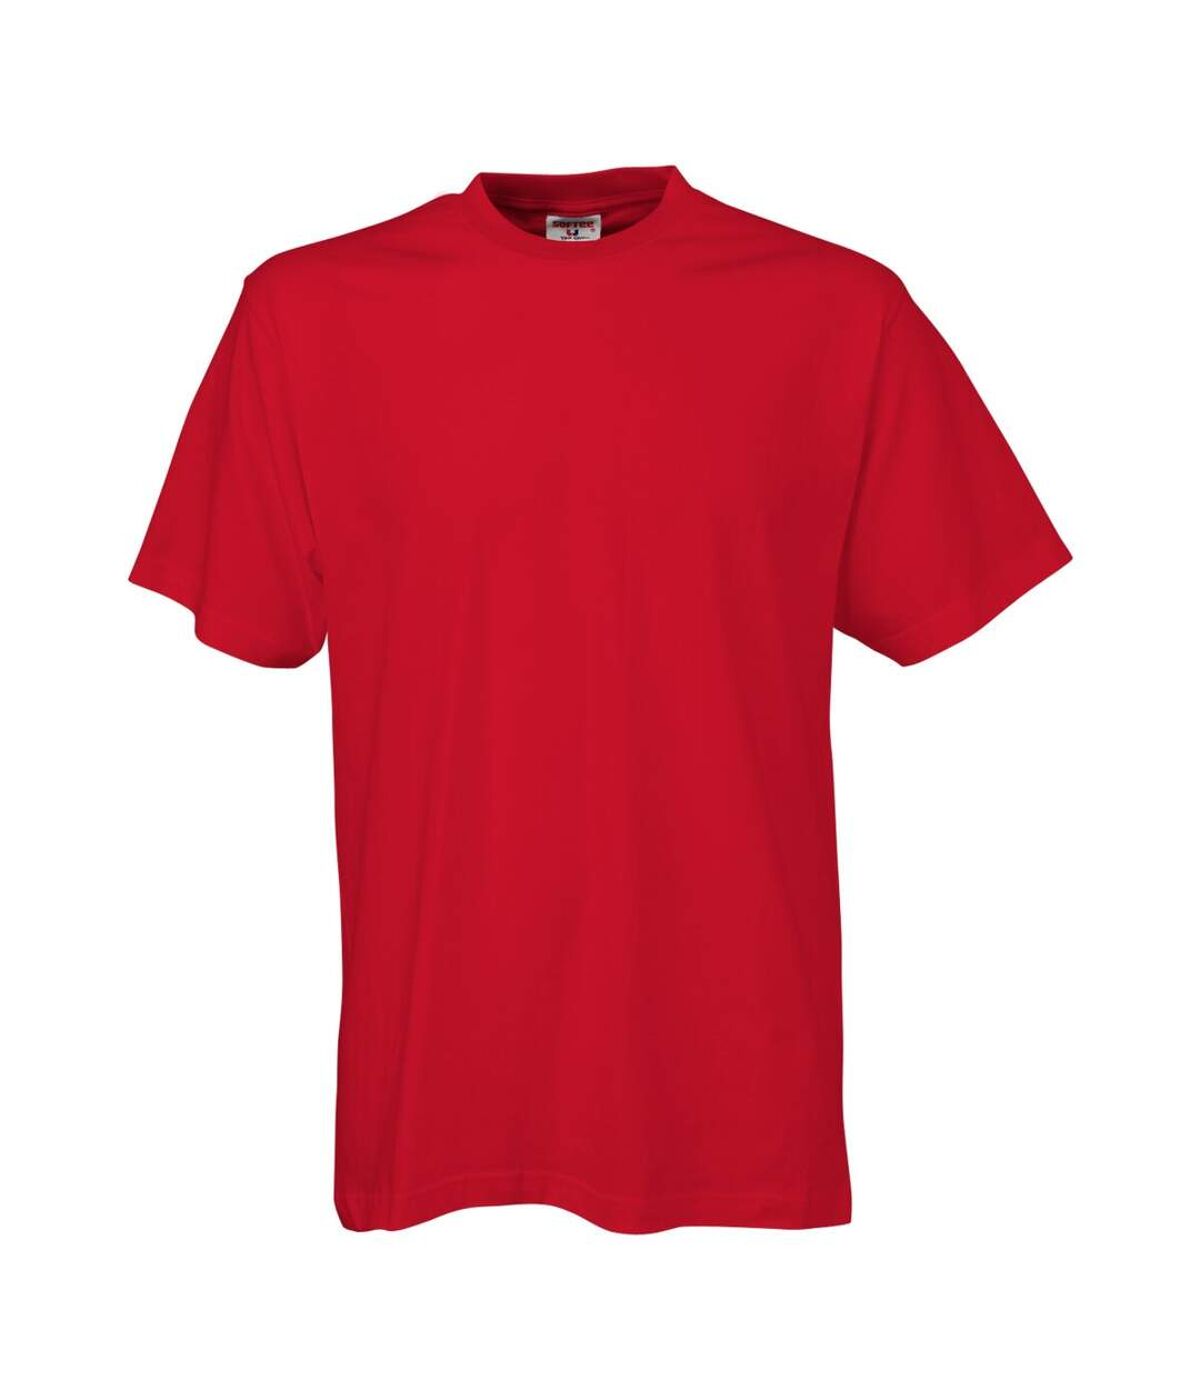 Tee Jays Mens Short Sleeve T-Shirt (Red)